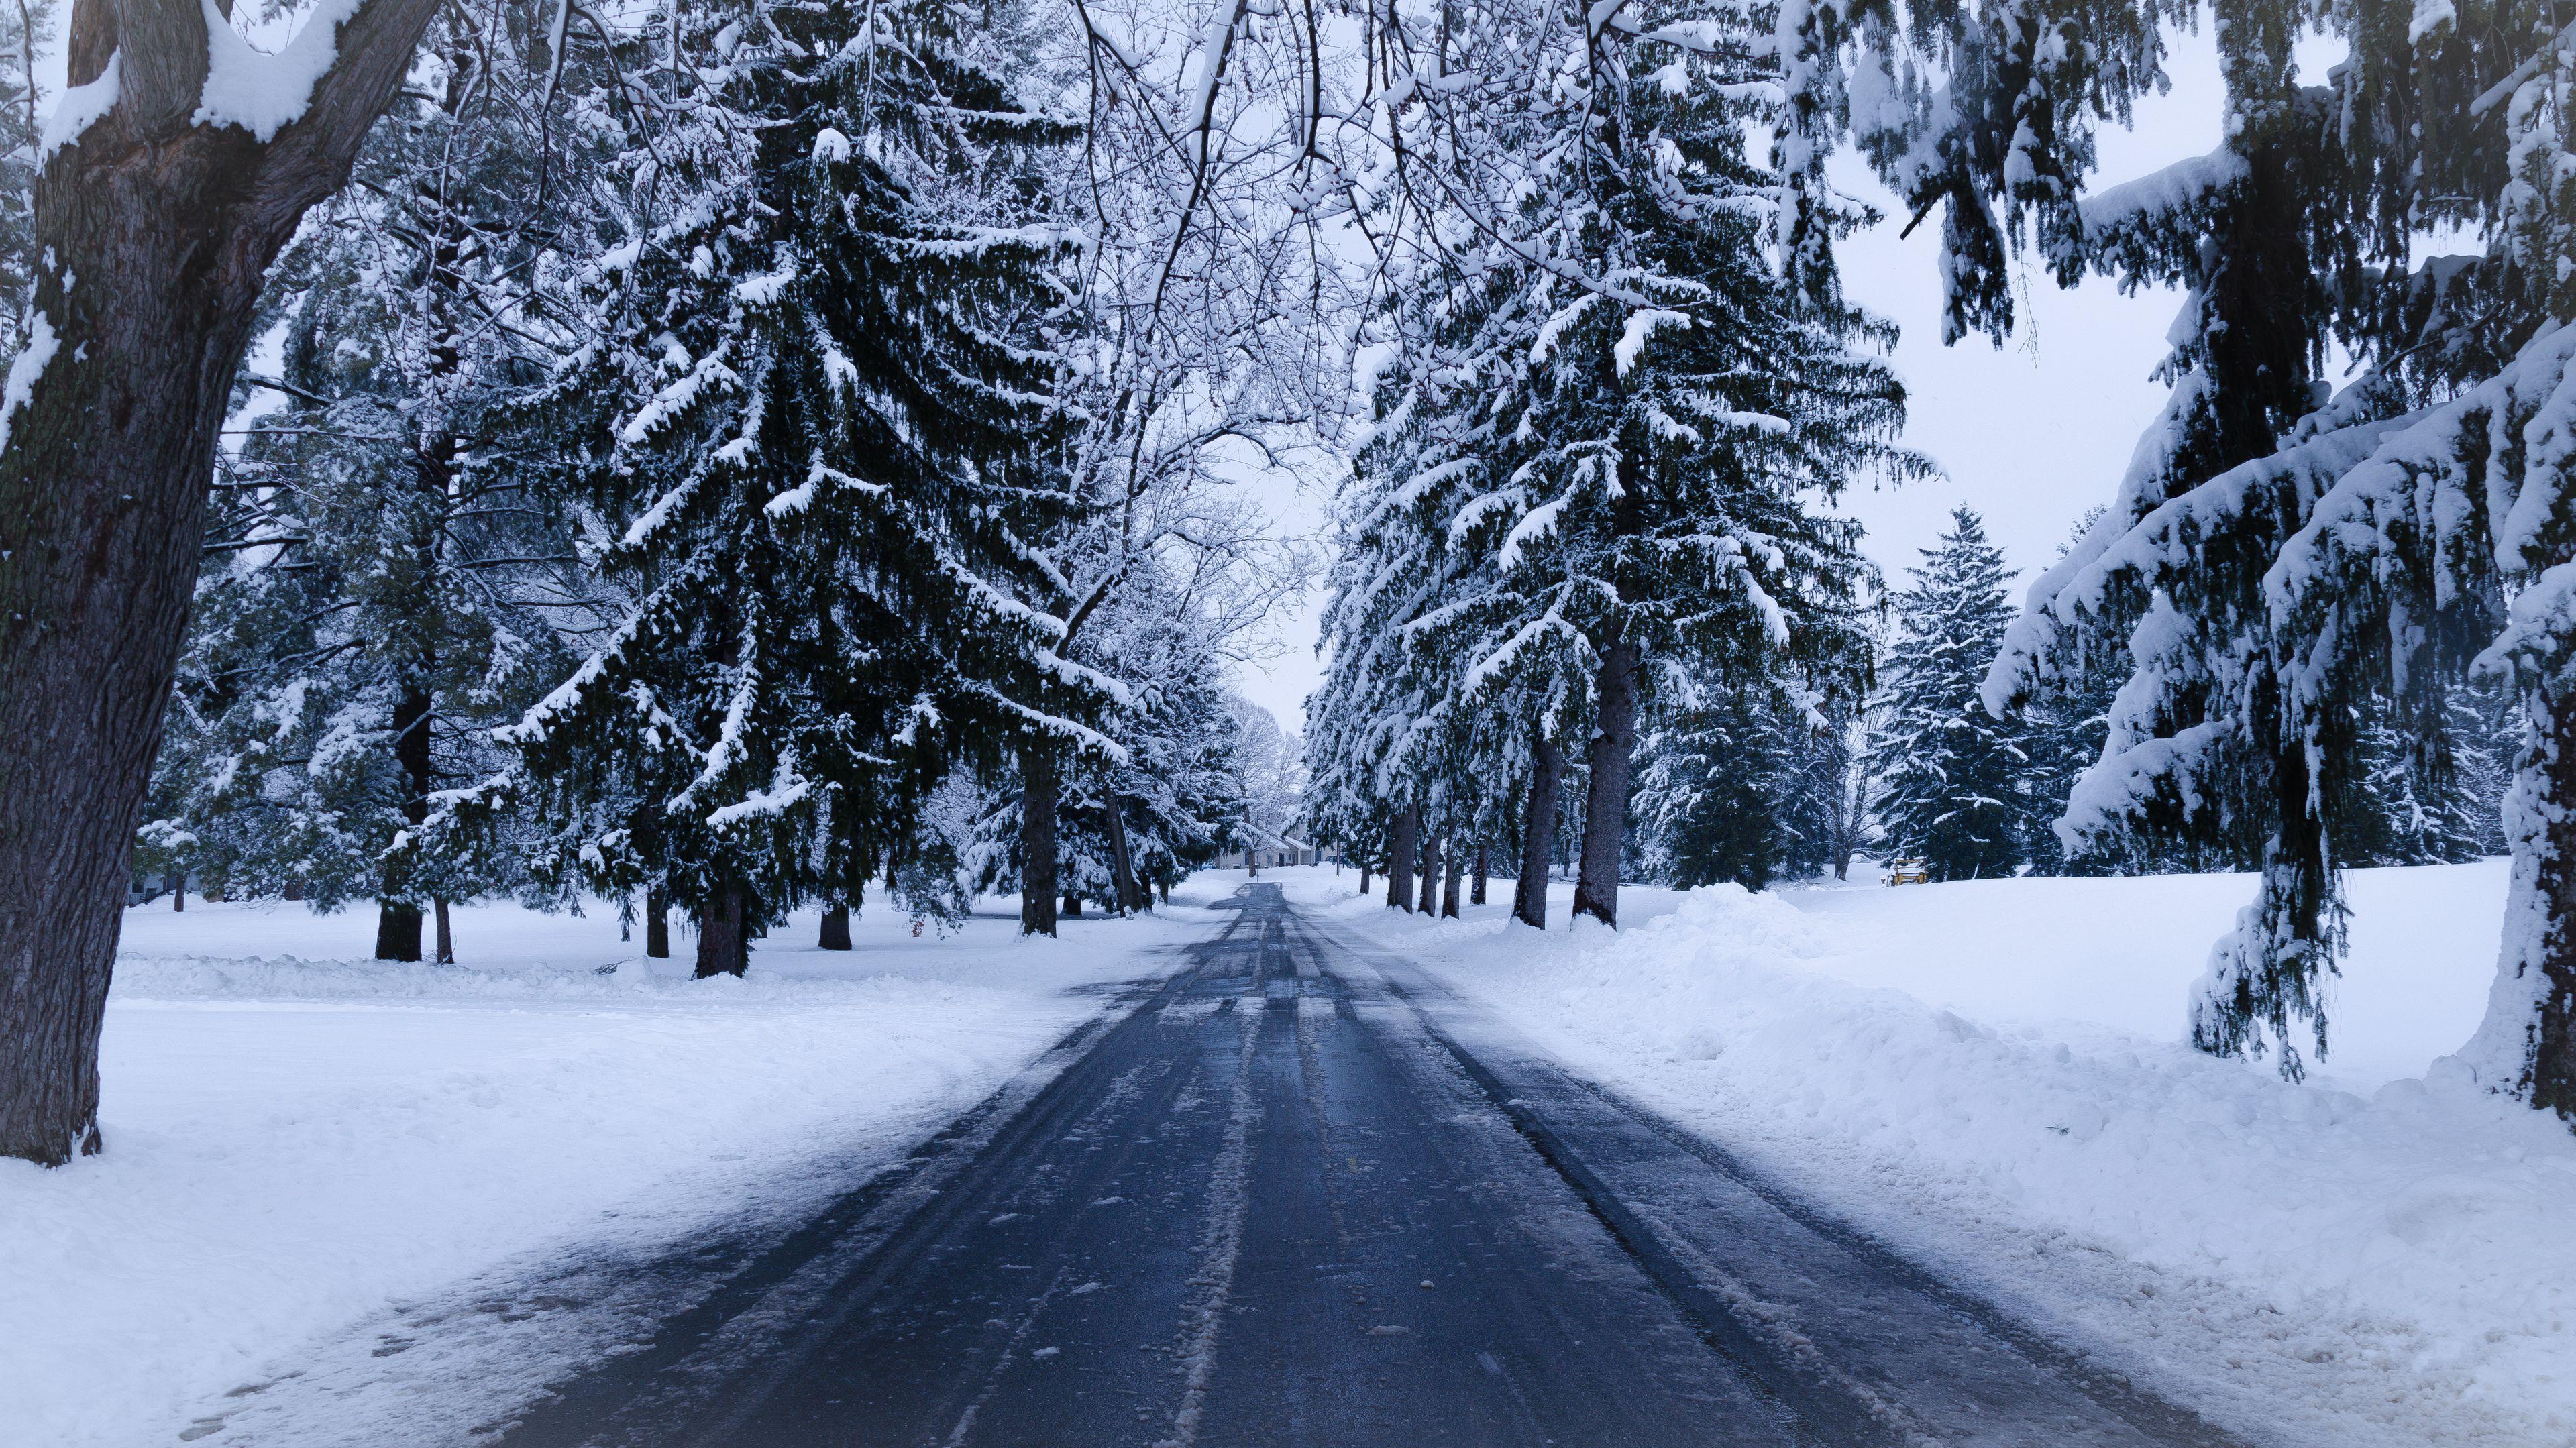 Download wallpaper 3840x2160 winter road snow trees winter